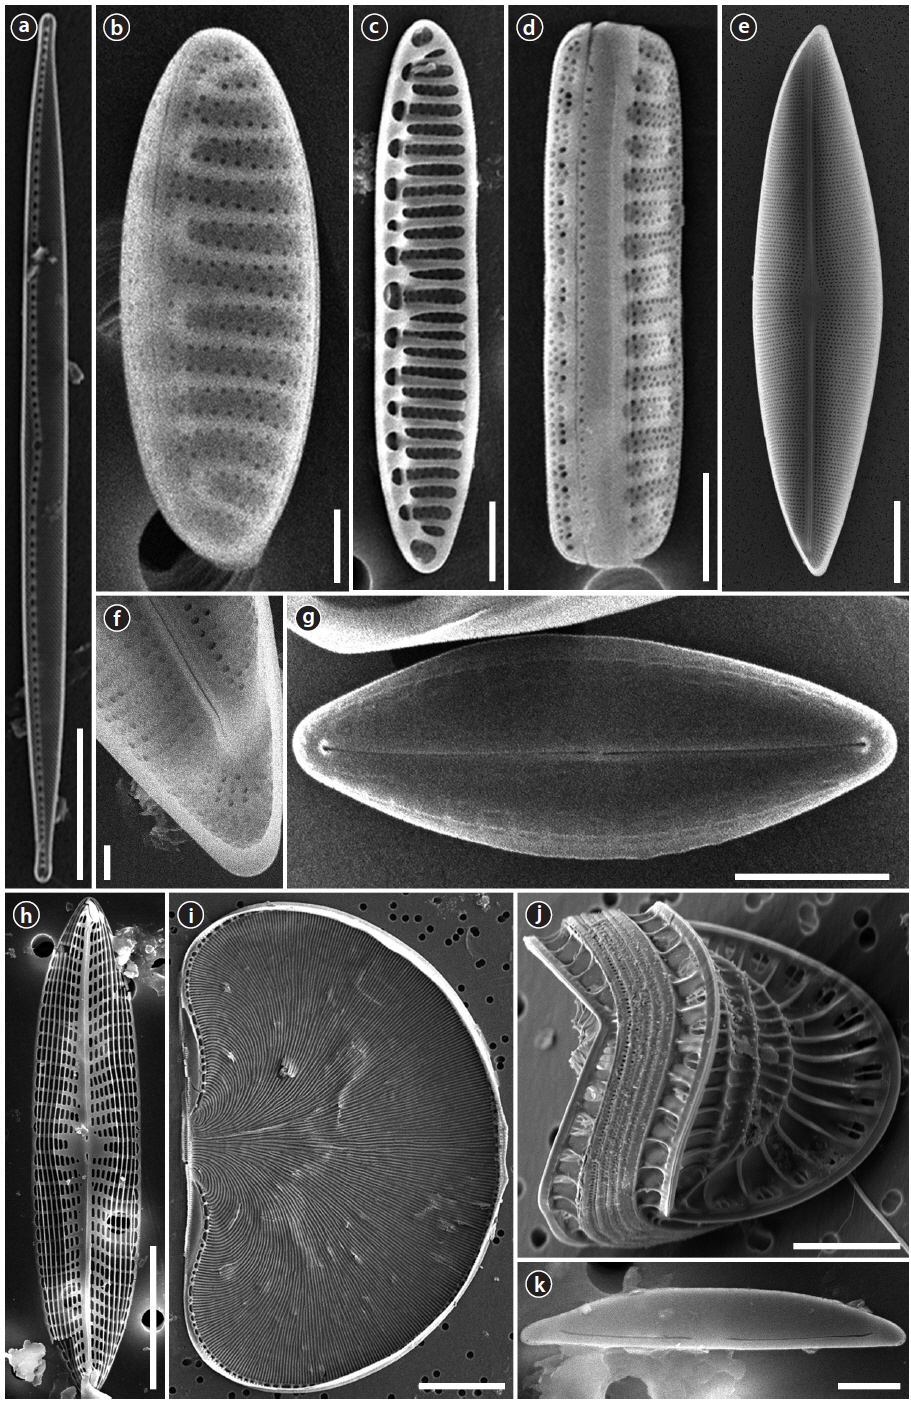 Scanning electron microscopy (SEM) microphotographs. (a) Nitzschia improvisa, (b-e) Nitzschia valdestriata, (e, f ) Parlibellus hamulifer, (g) Parlibellus rhombicus, (h) Navicula pavilladii, (i) Auricula flabelliformis, (j) Campylodiscus samoensis, and (k) Catenula adhaerens. Scale bars represent: 20 μm (a, i); 1 μm (b, f ); 2 μm (c, d, g, k); 10 μm (e, h).